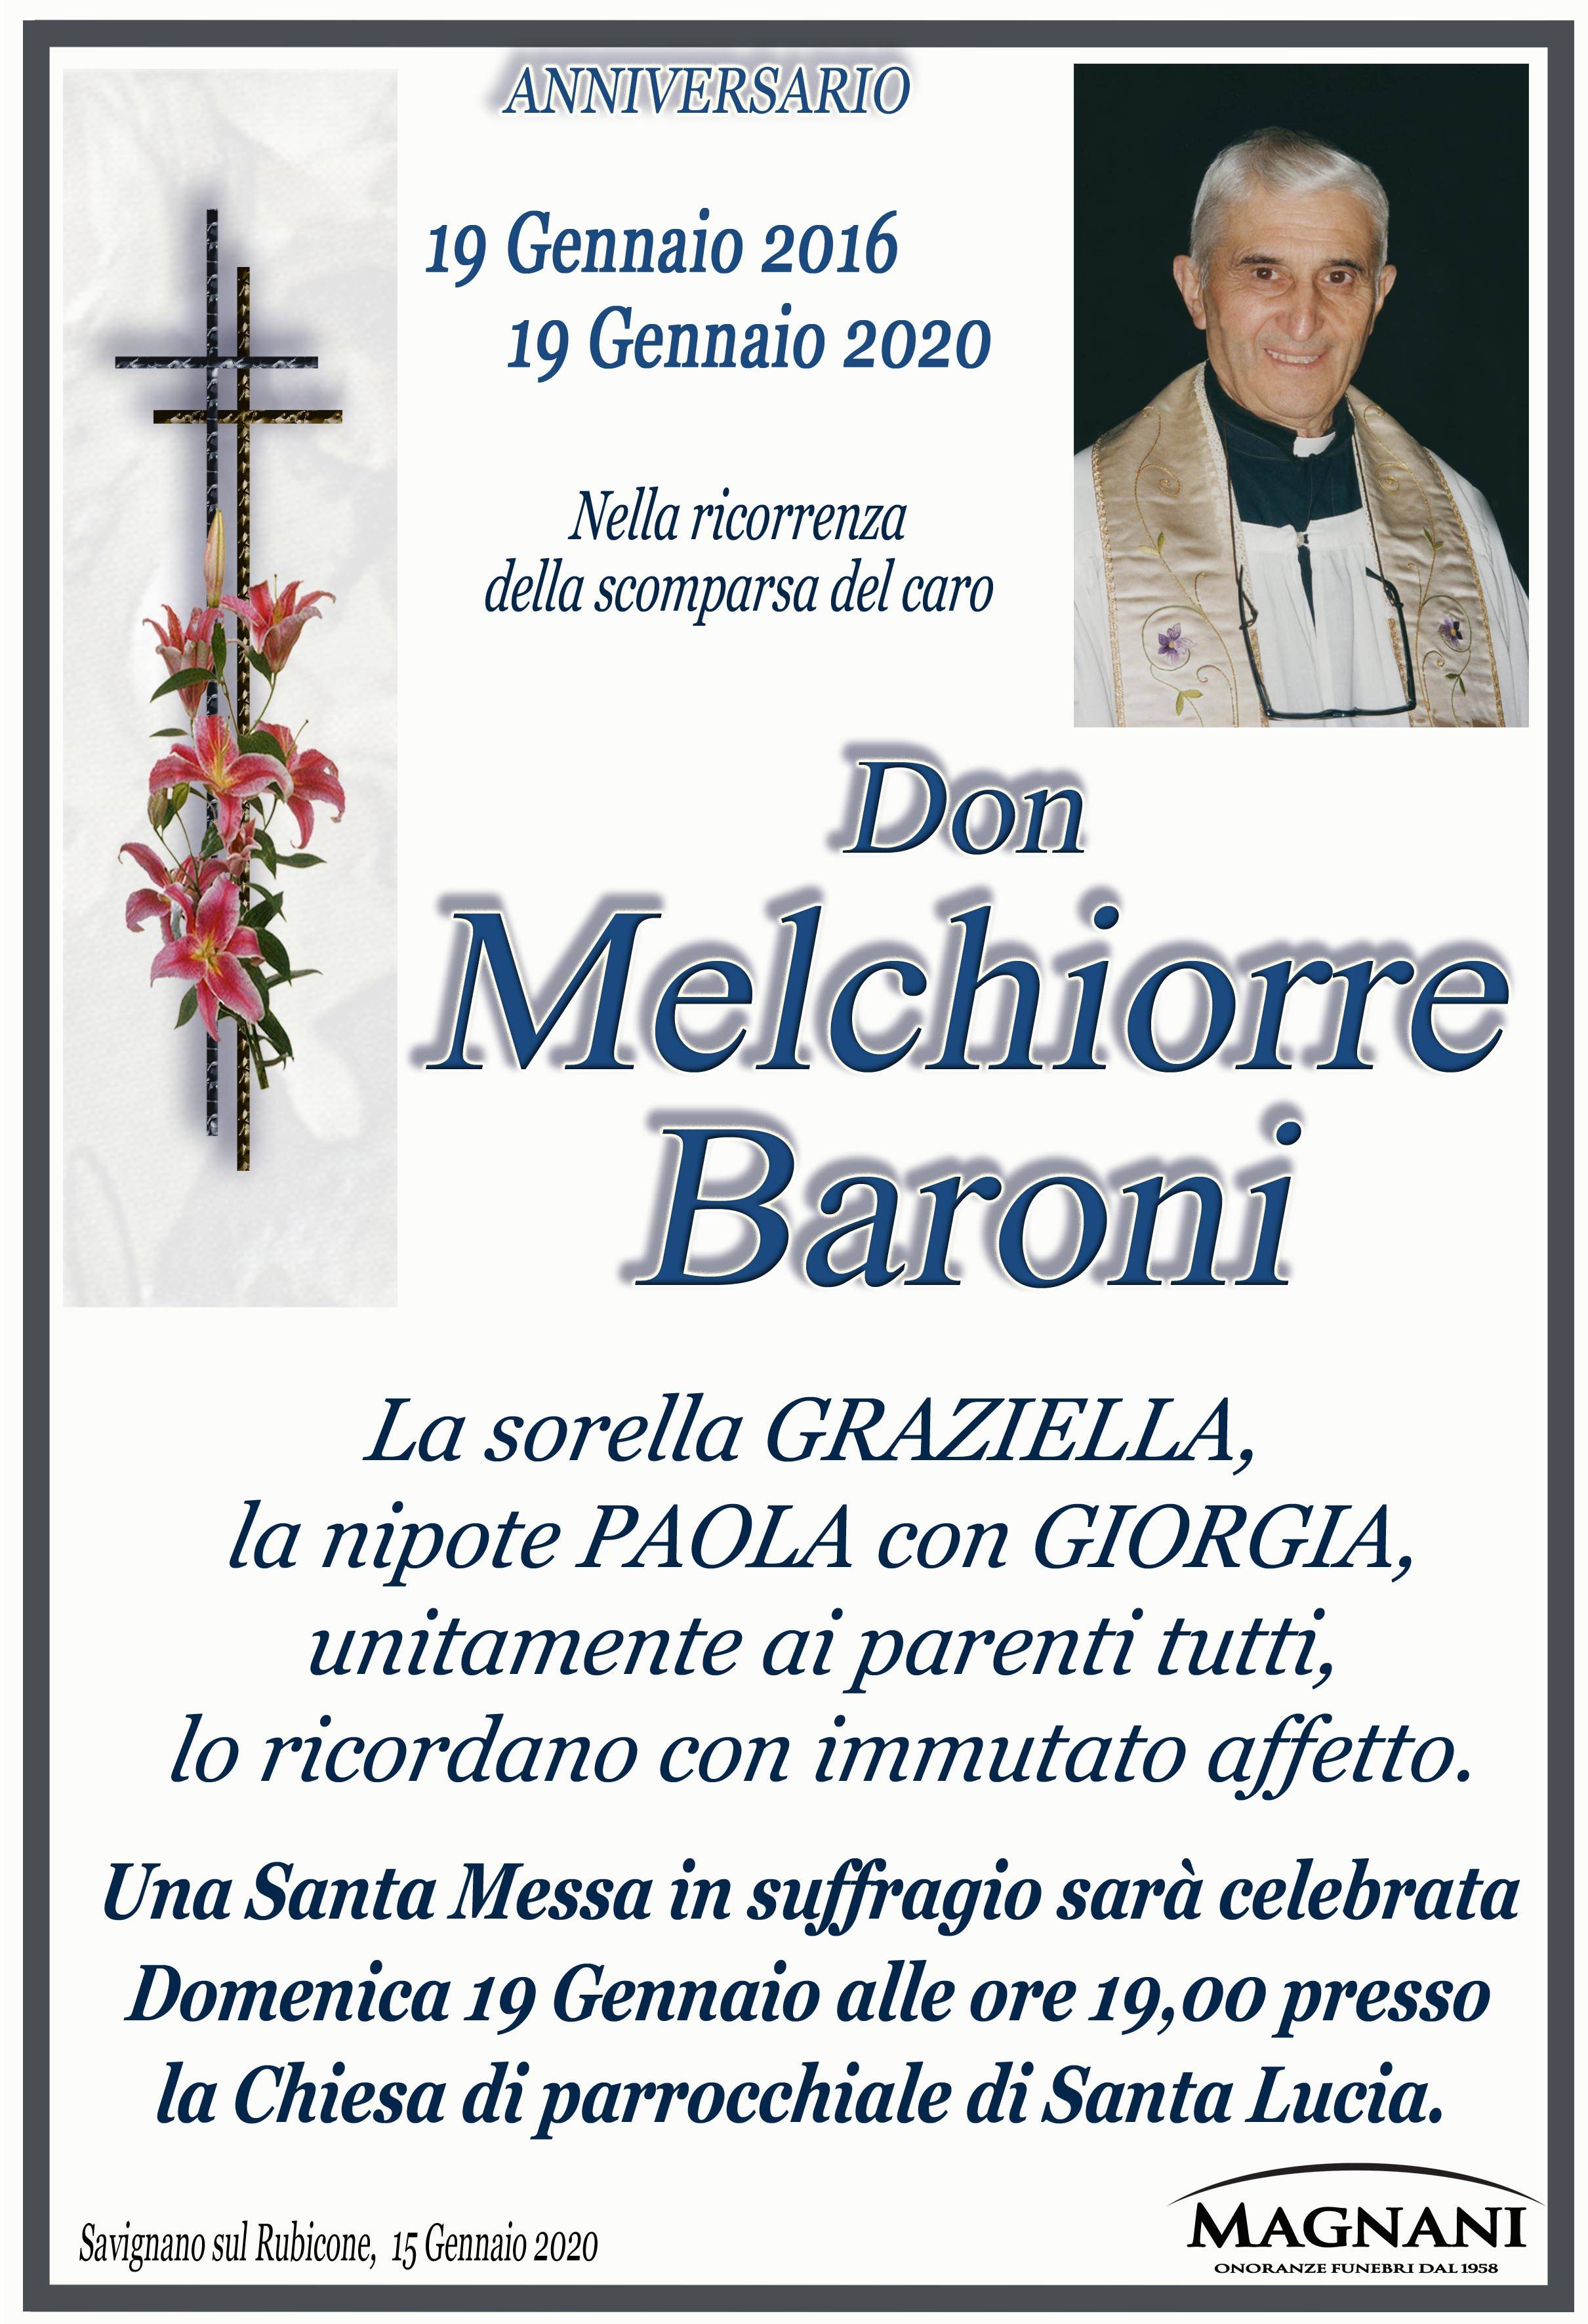 Don Melchiorre Baroni